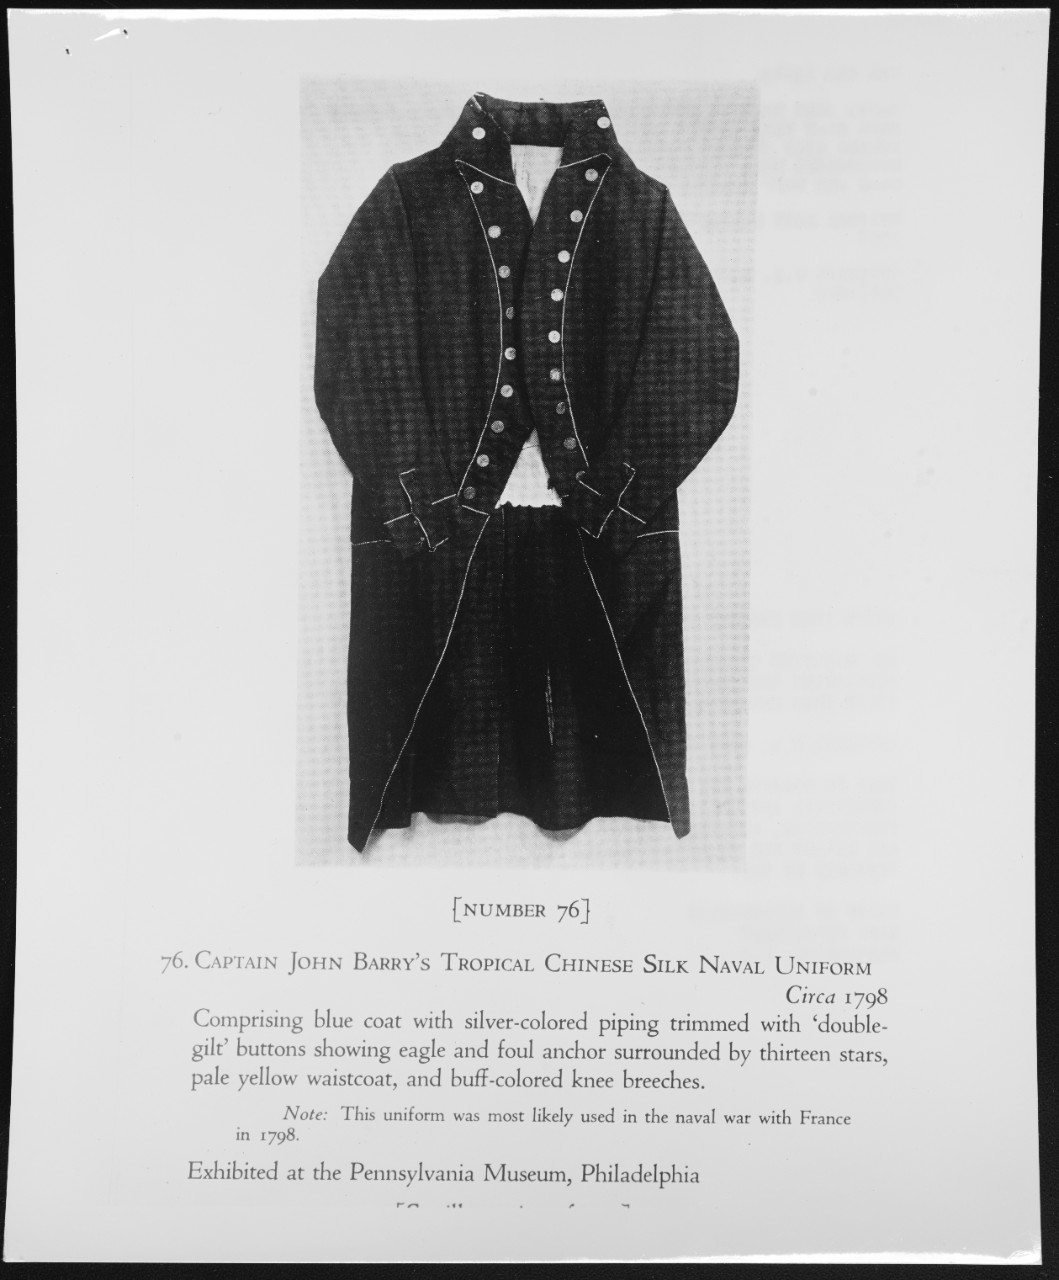 Captain John Barry's Tropical Chinese Silk Naval Uniform, circa 1798